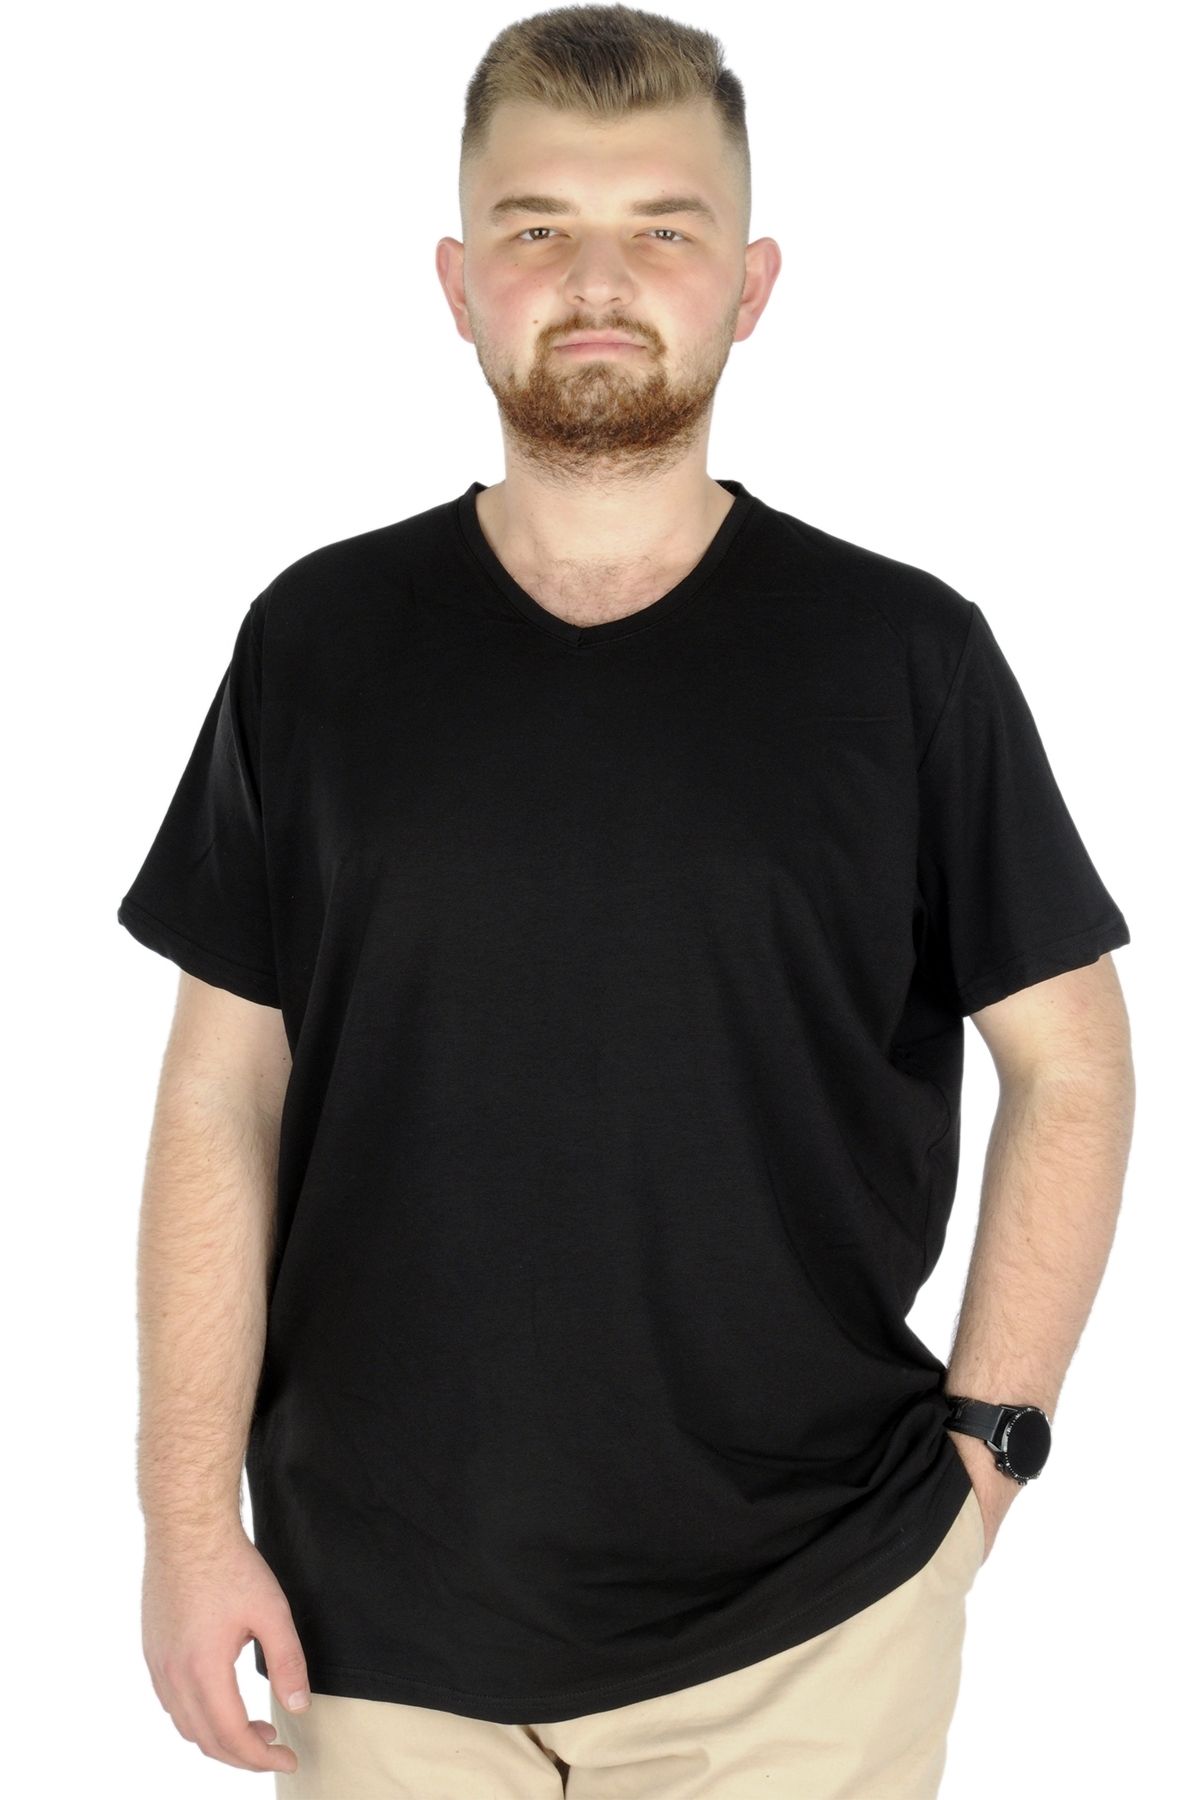 Modexl Mode Xl Büyük Beden T-shirt V Yaka Likralı 20150 Siyah